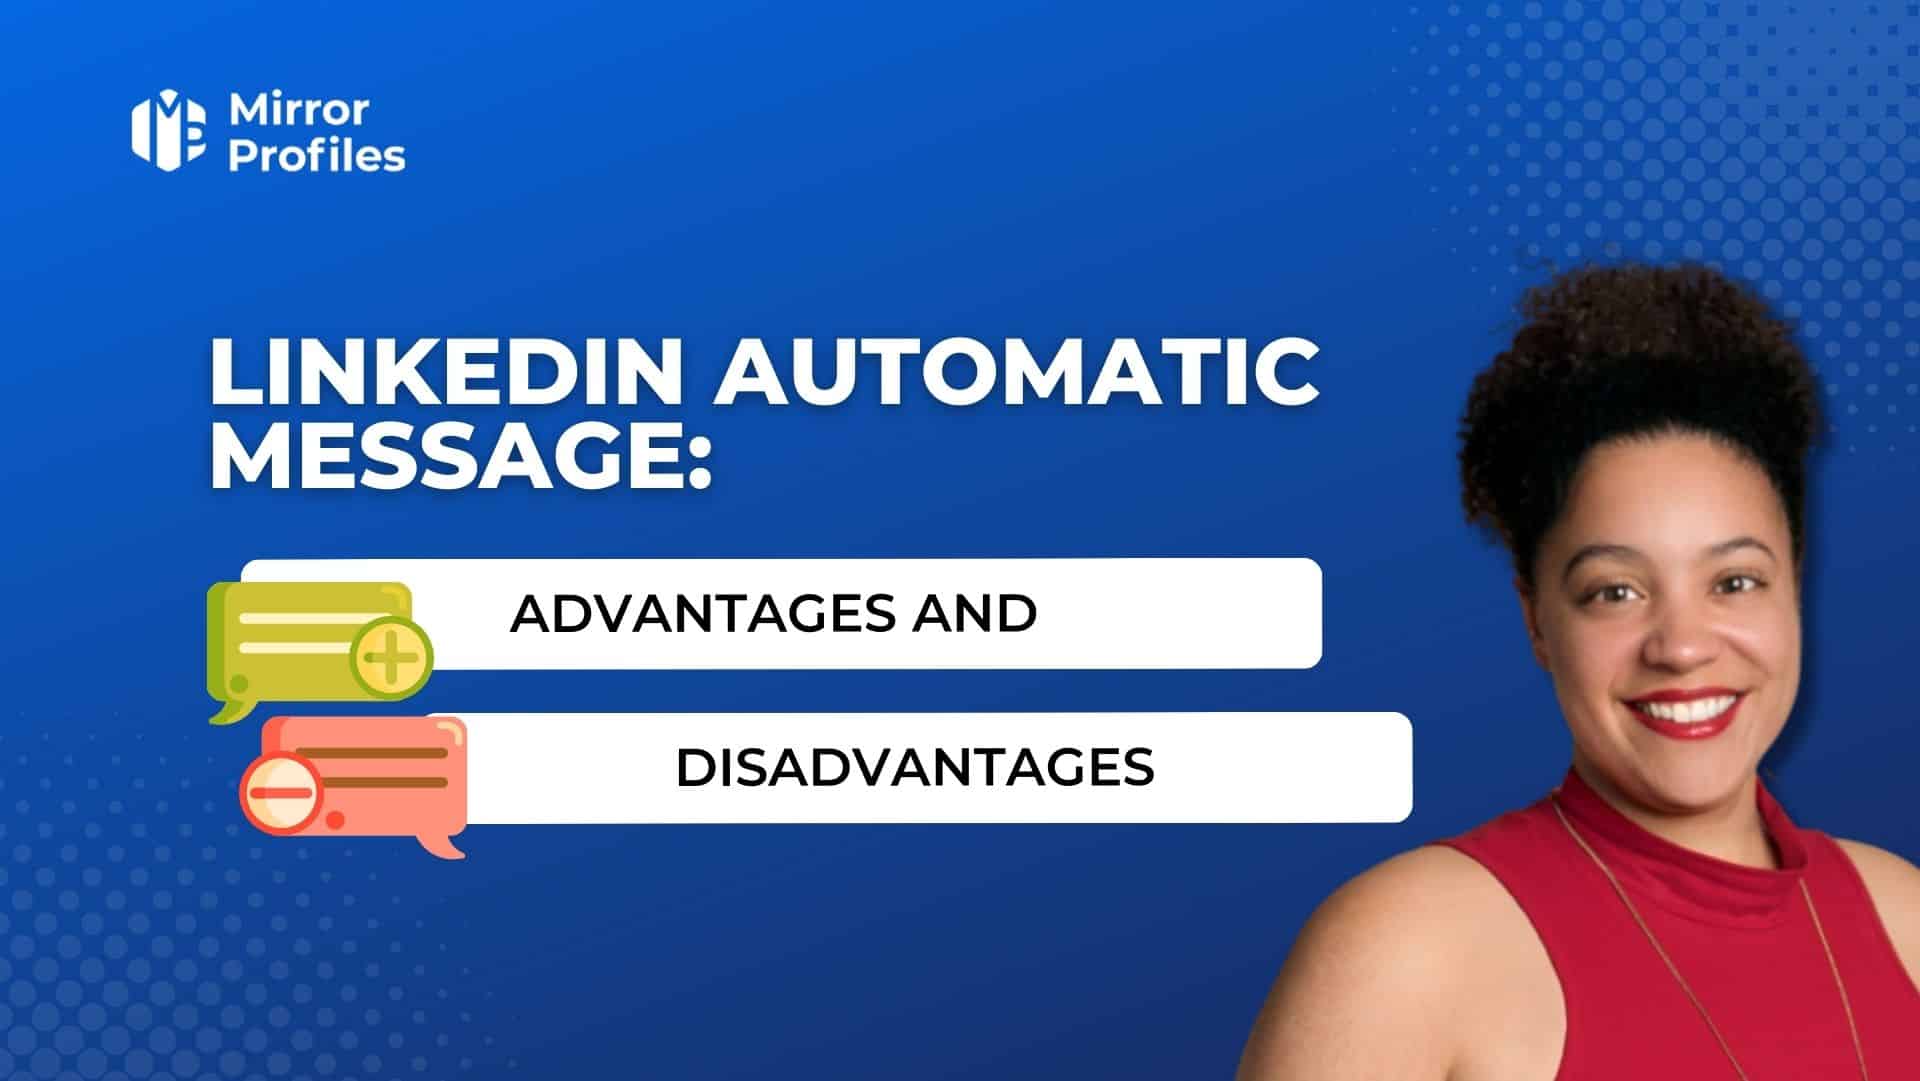 Linkedin Automatic Message: Advantages and disadvantages